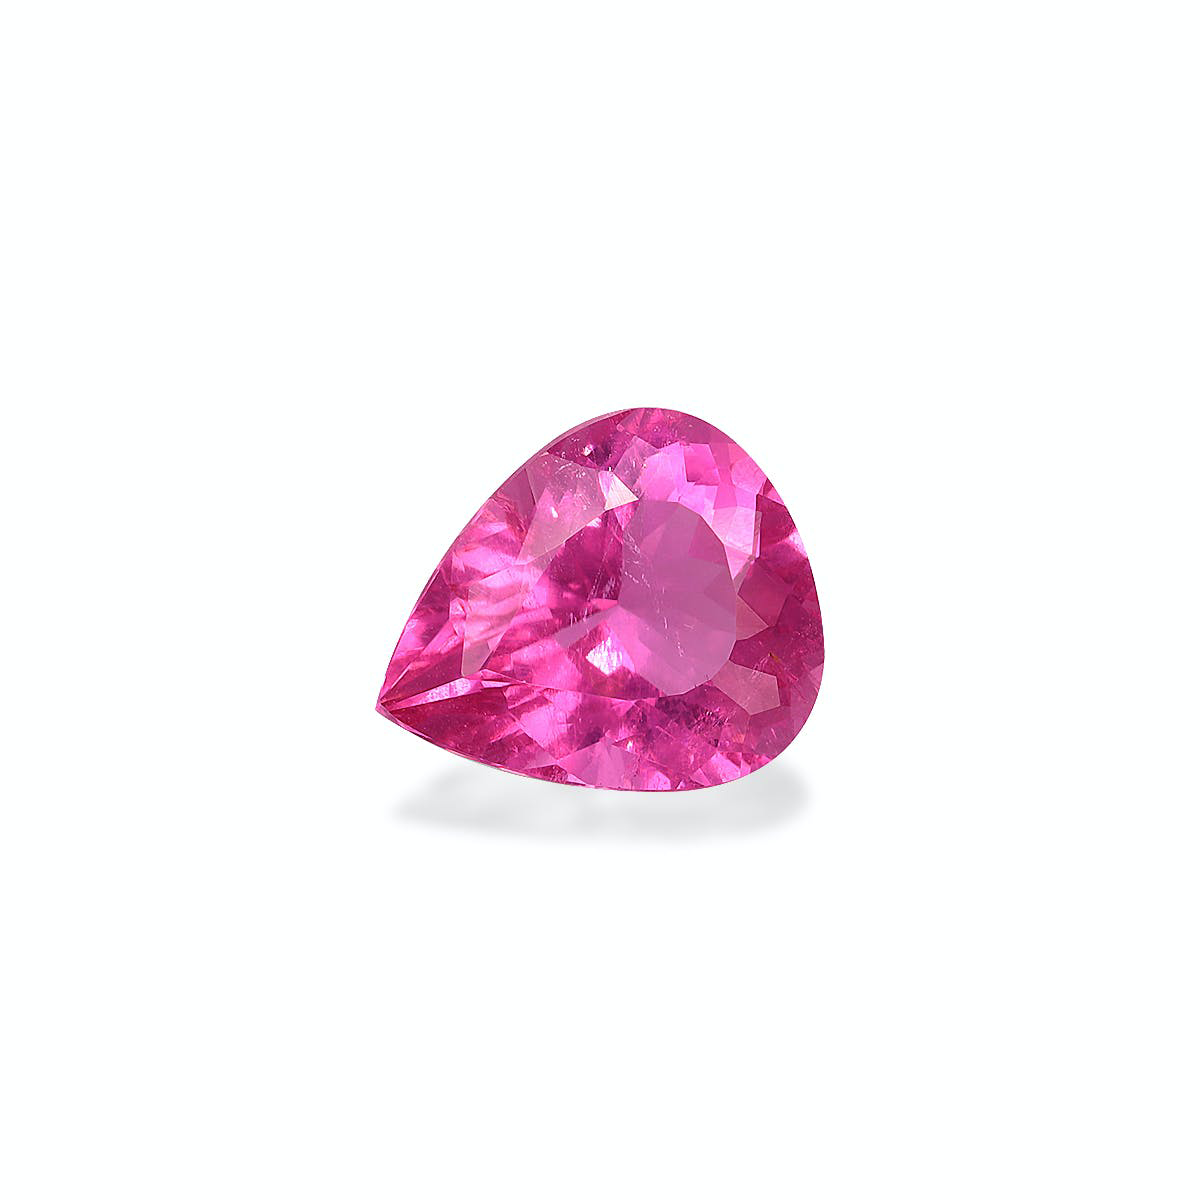 Picture of Fuscia Pink Rubellite Tourmaline 2.99ct - 11x9mm (RL1235)